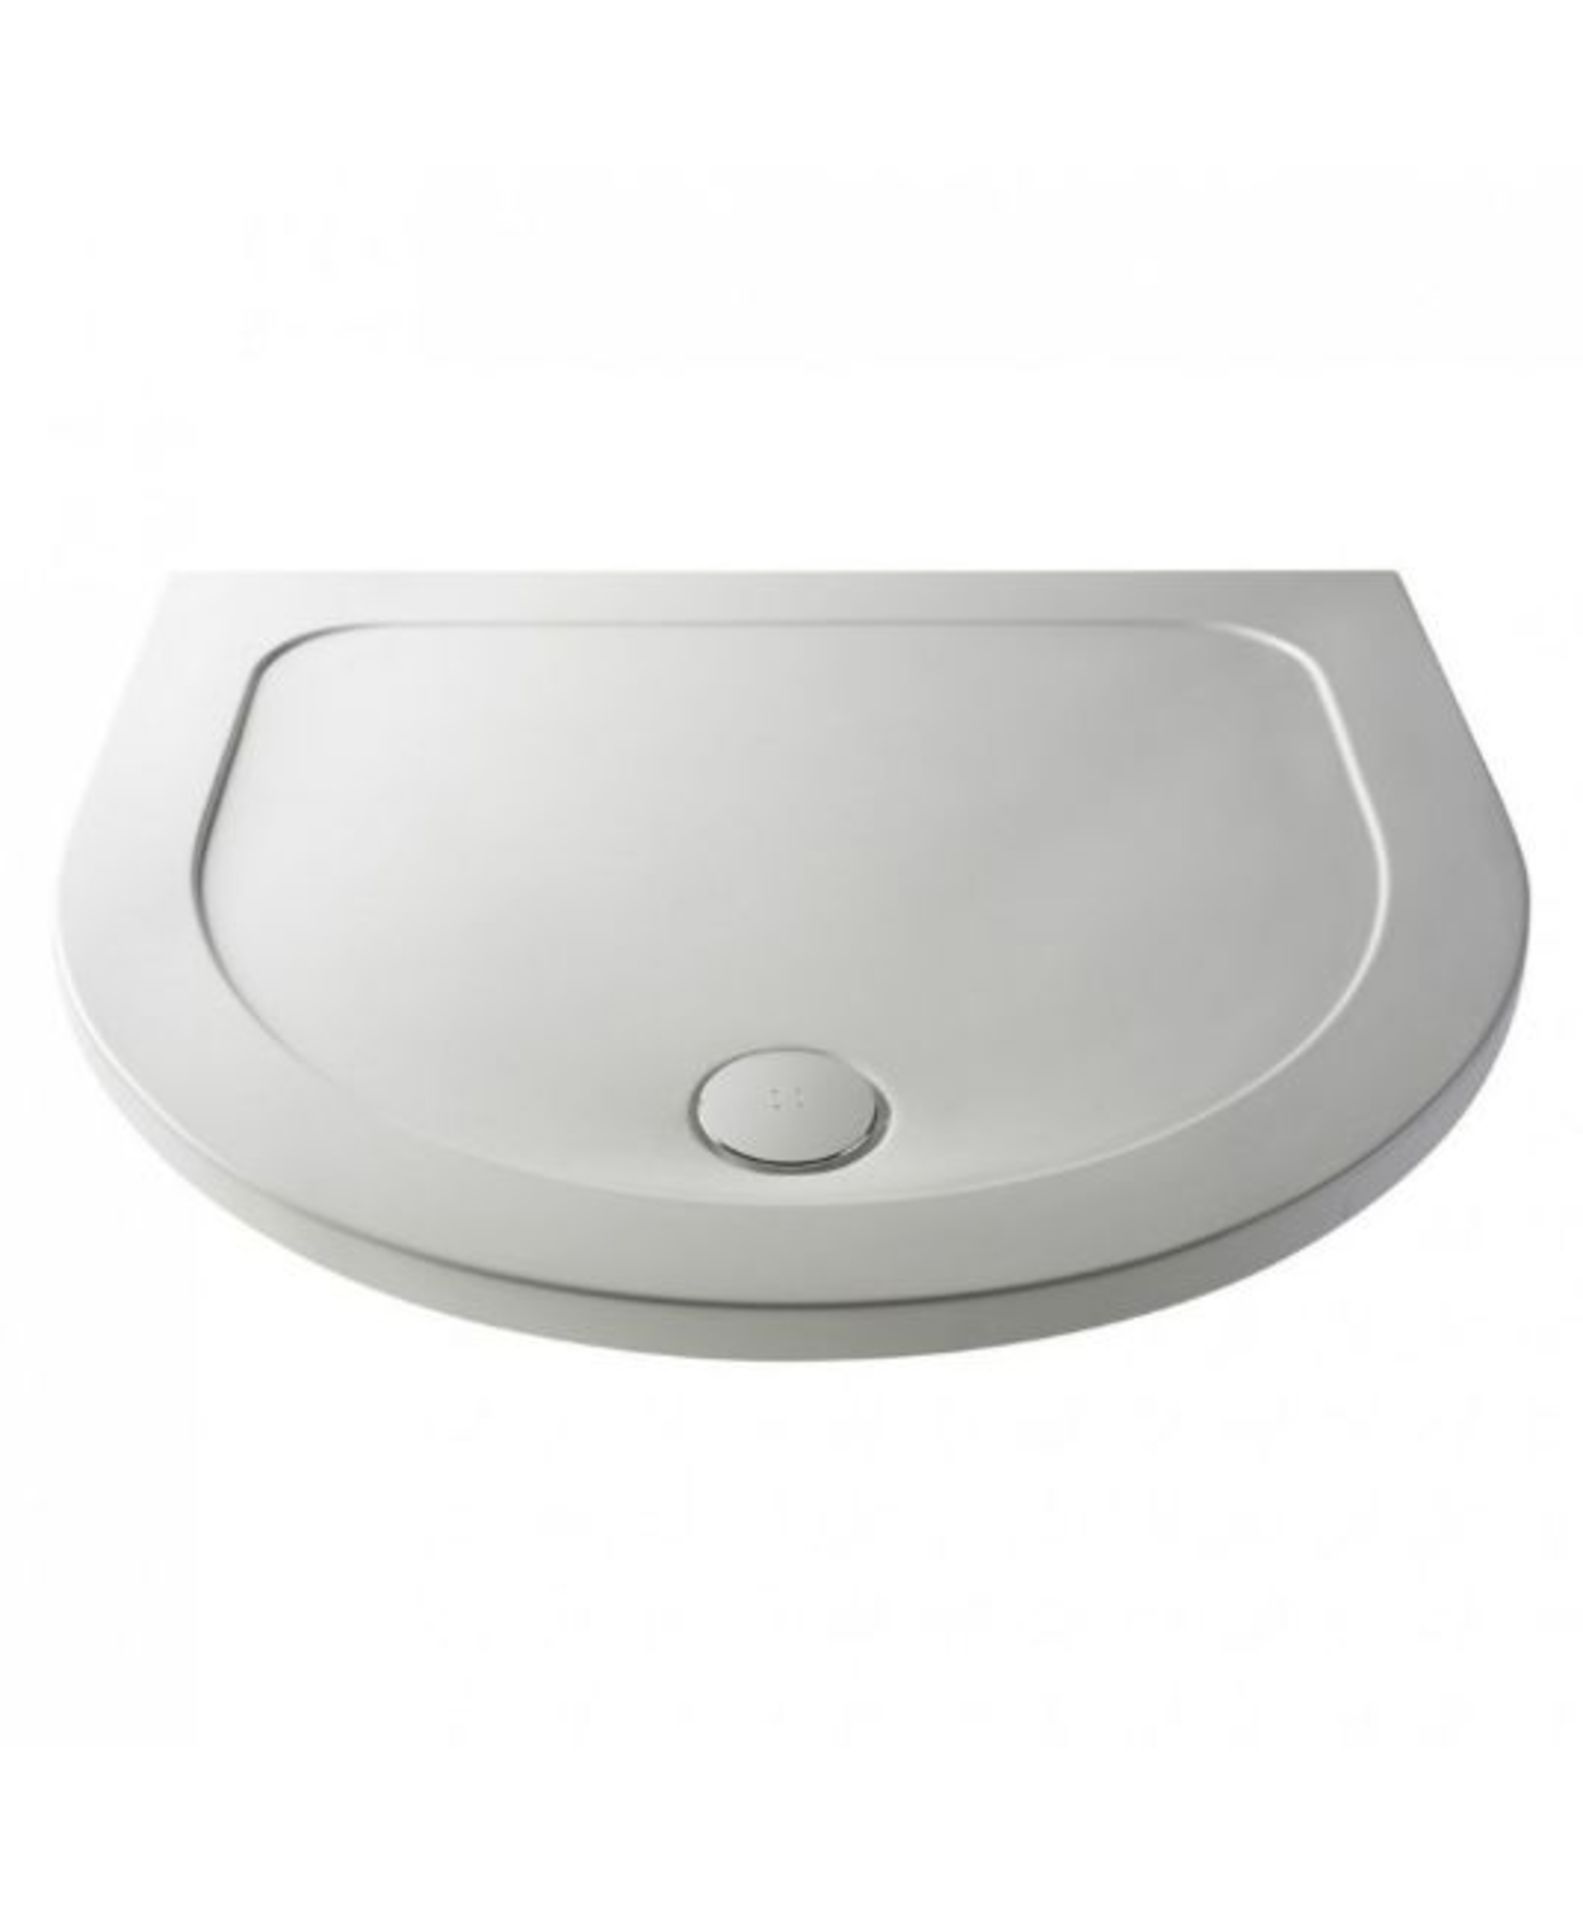 New (Pc129) Twyford's 770 mm Hydro D Shape White Shower Tray. Low Profile Ultra Slim Design Gel